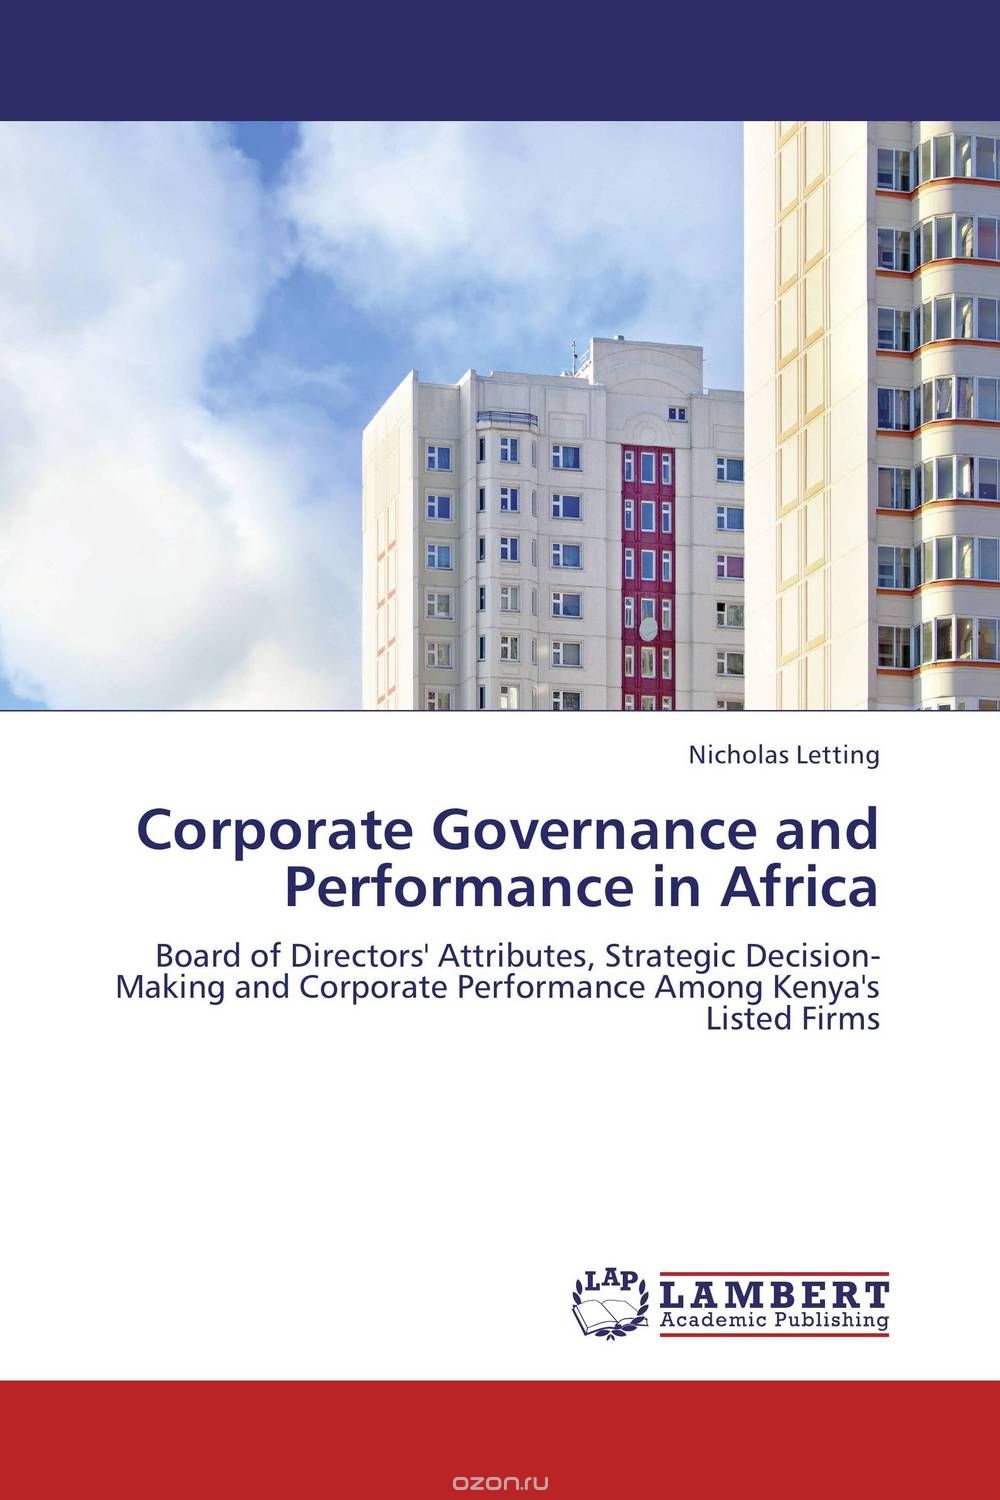 Скачать книгу "Corporate Governance and Performance in Africa"